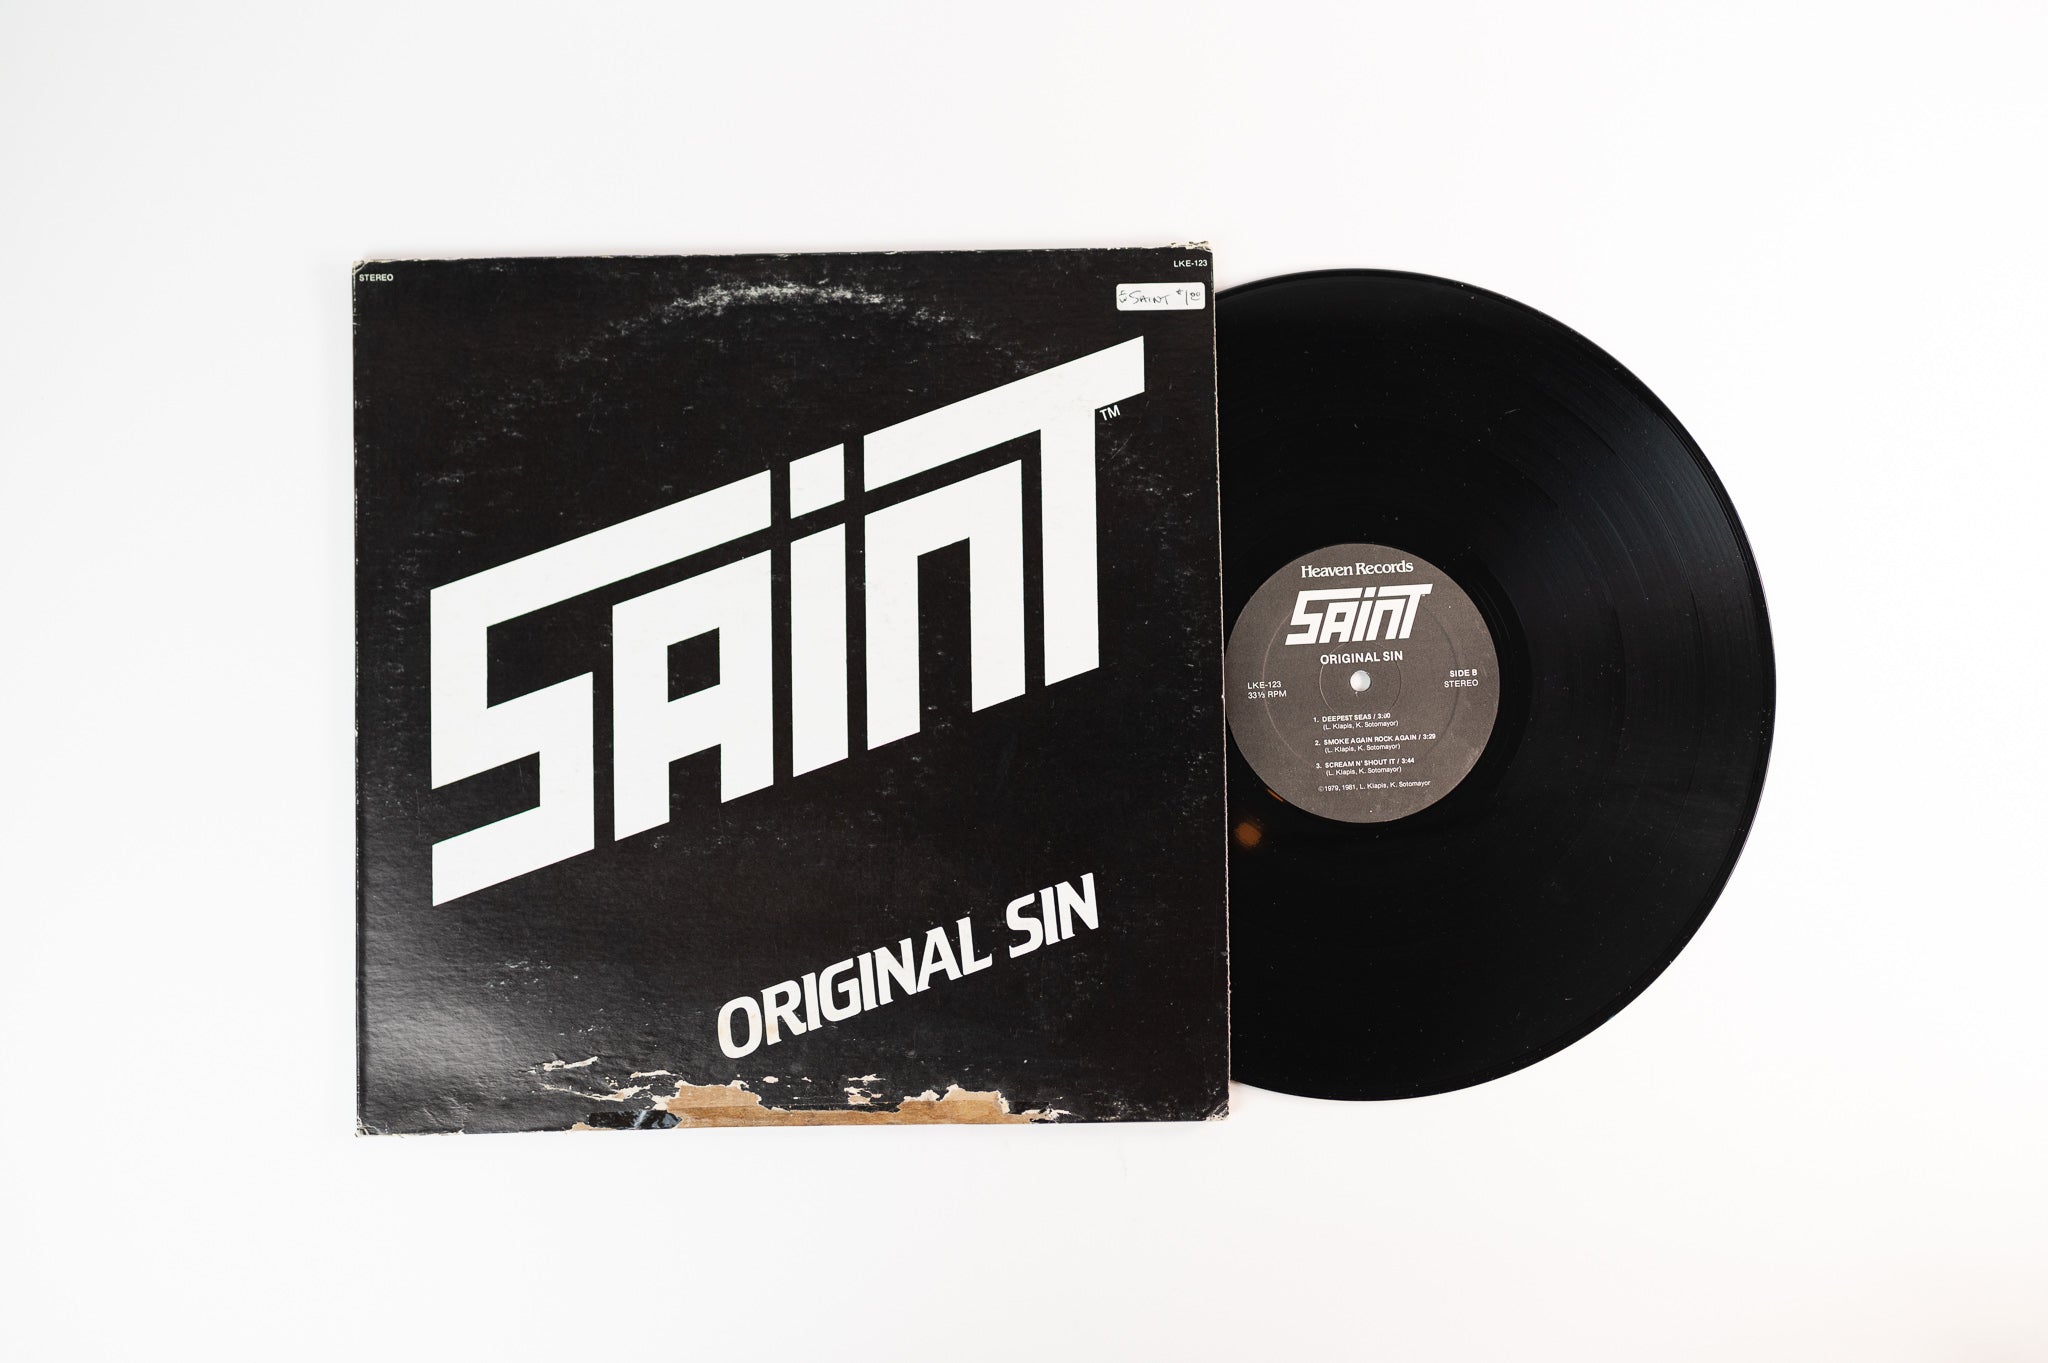 Saint - Original Sin on Heaven Records